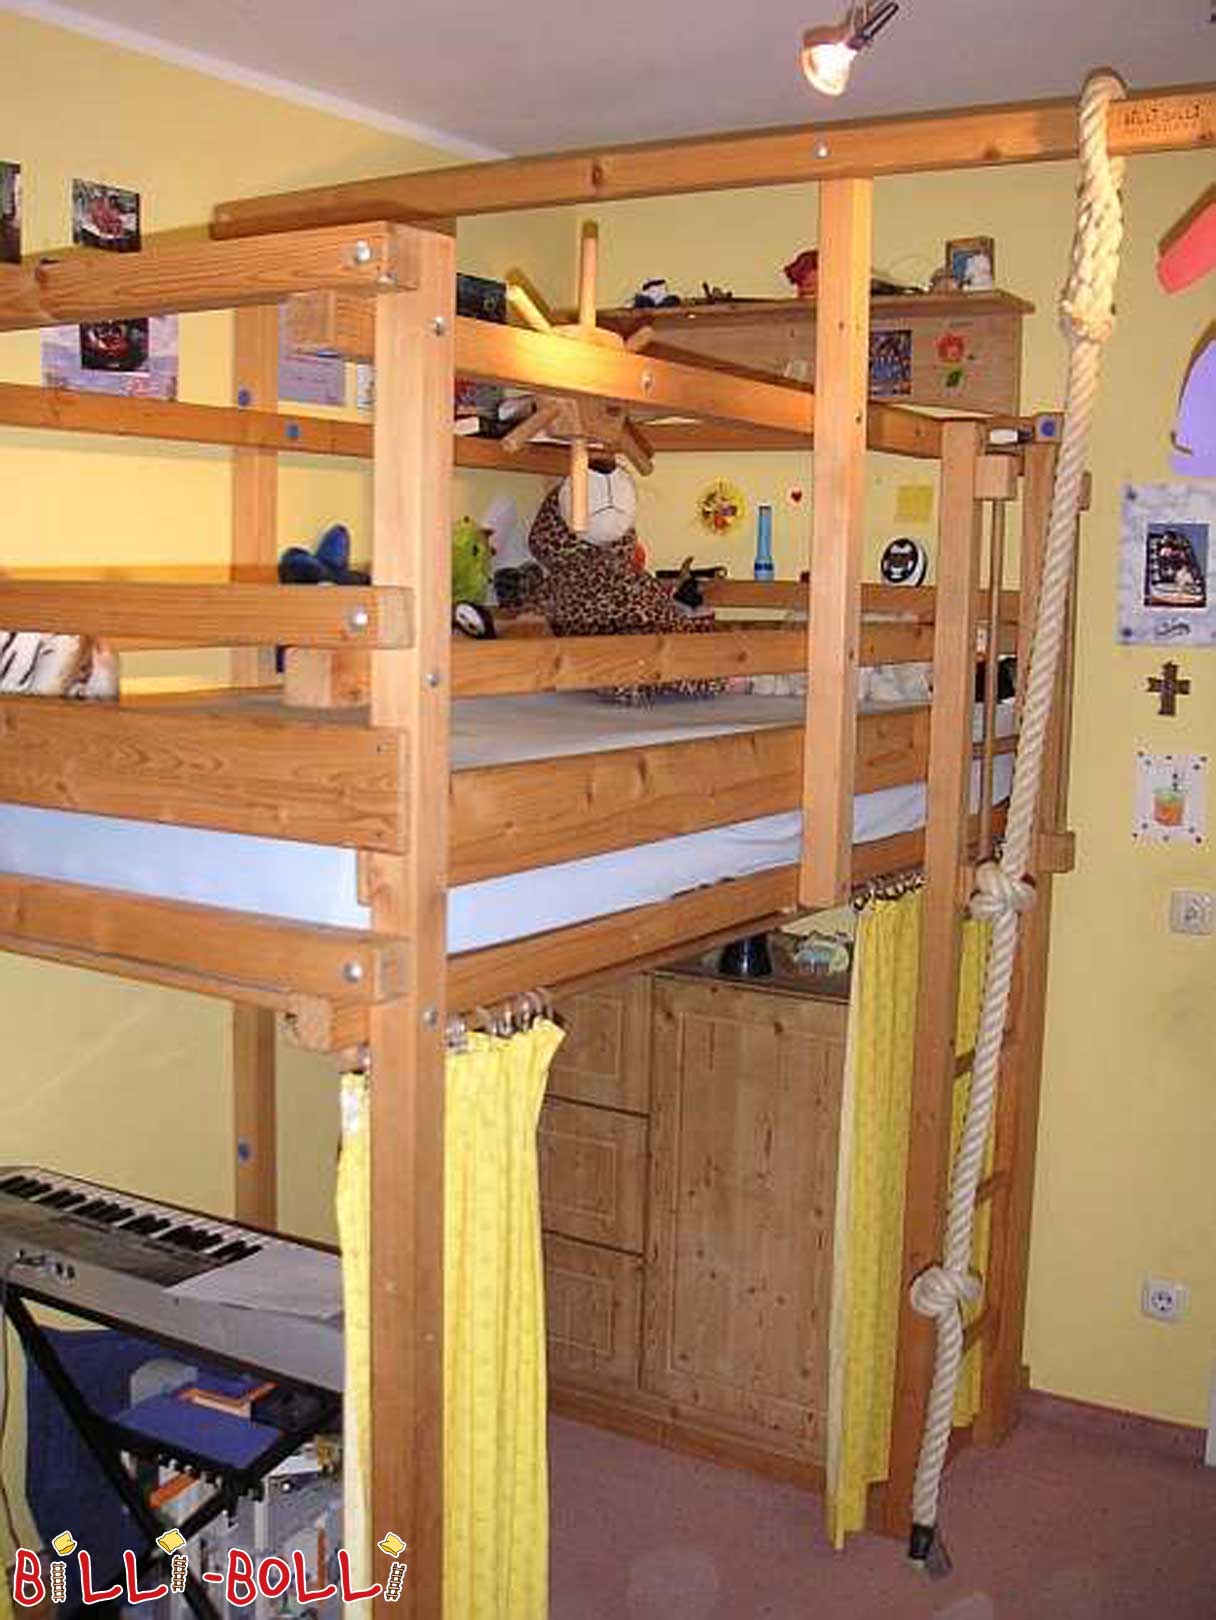 Billi-Bolli Adventure Loft Bed (Category: second hand loft bed)